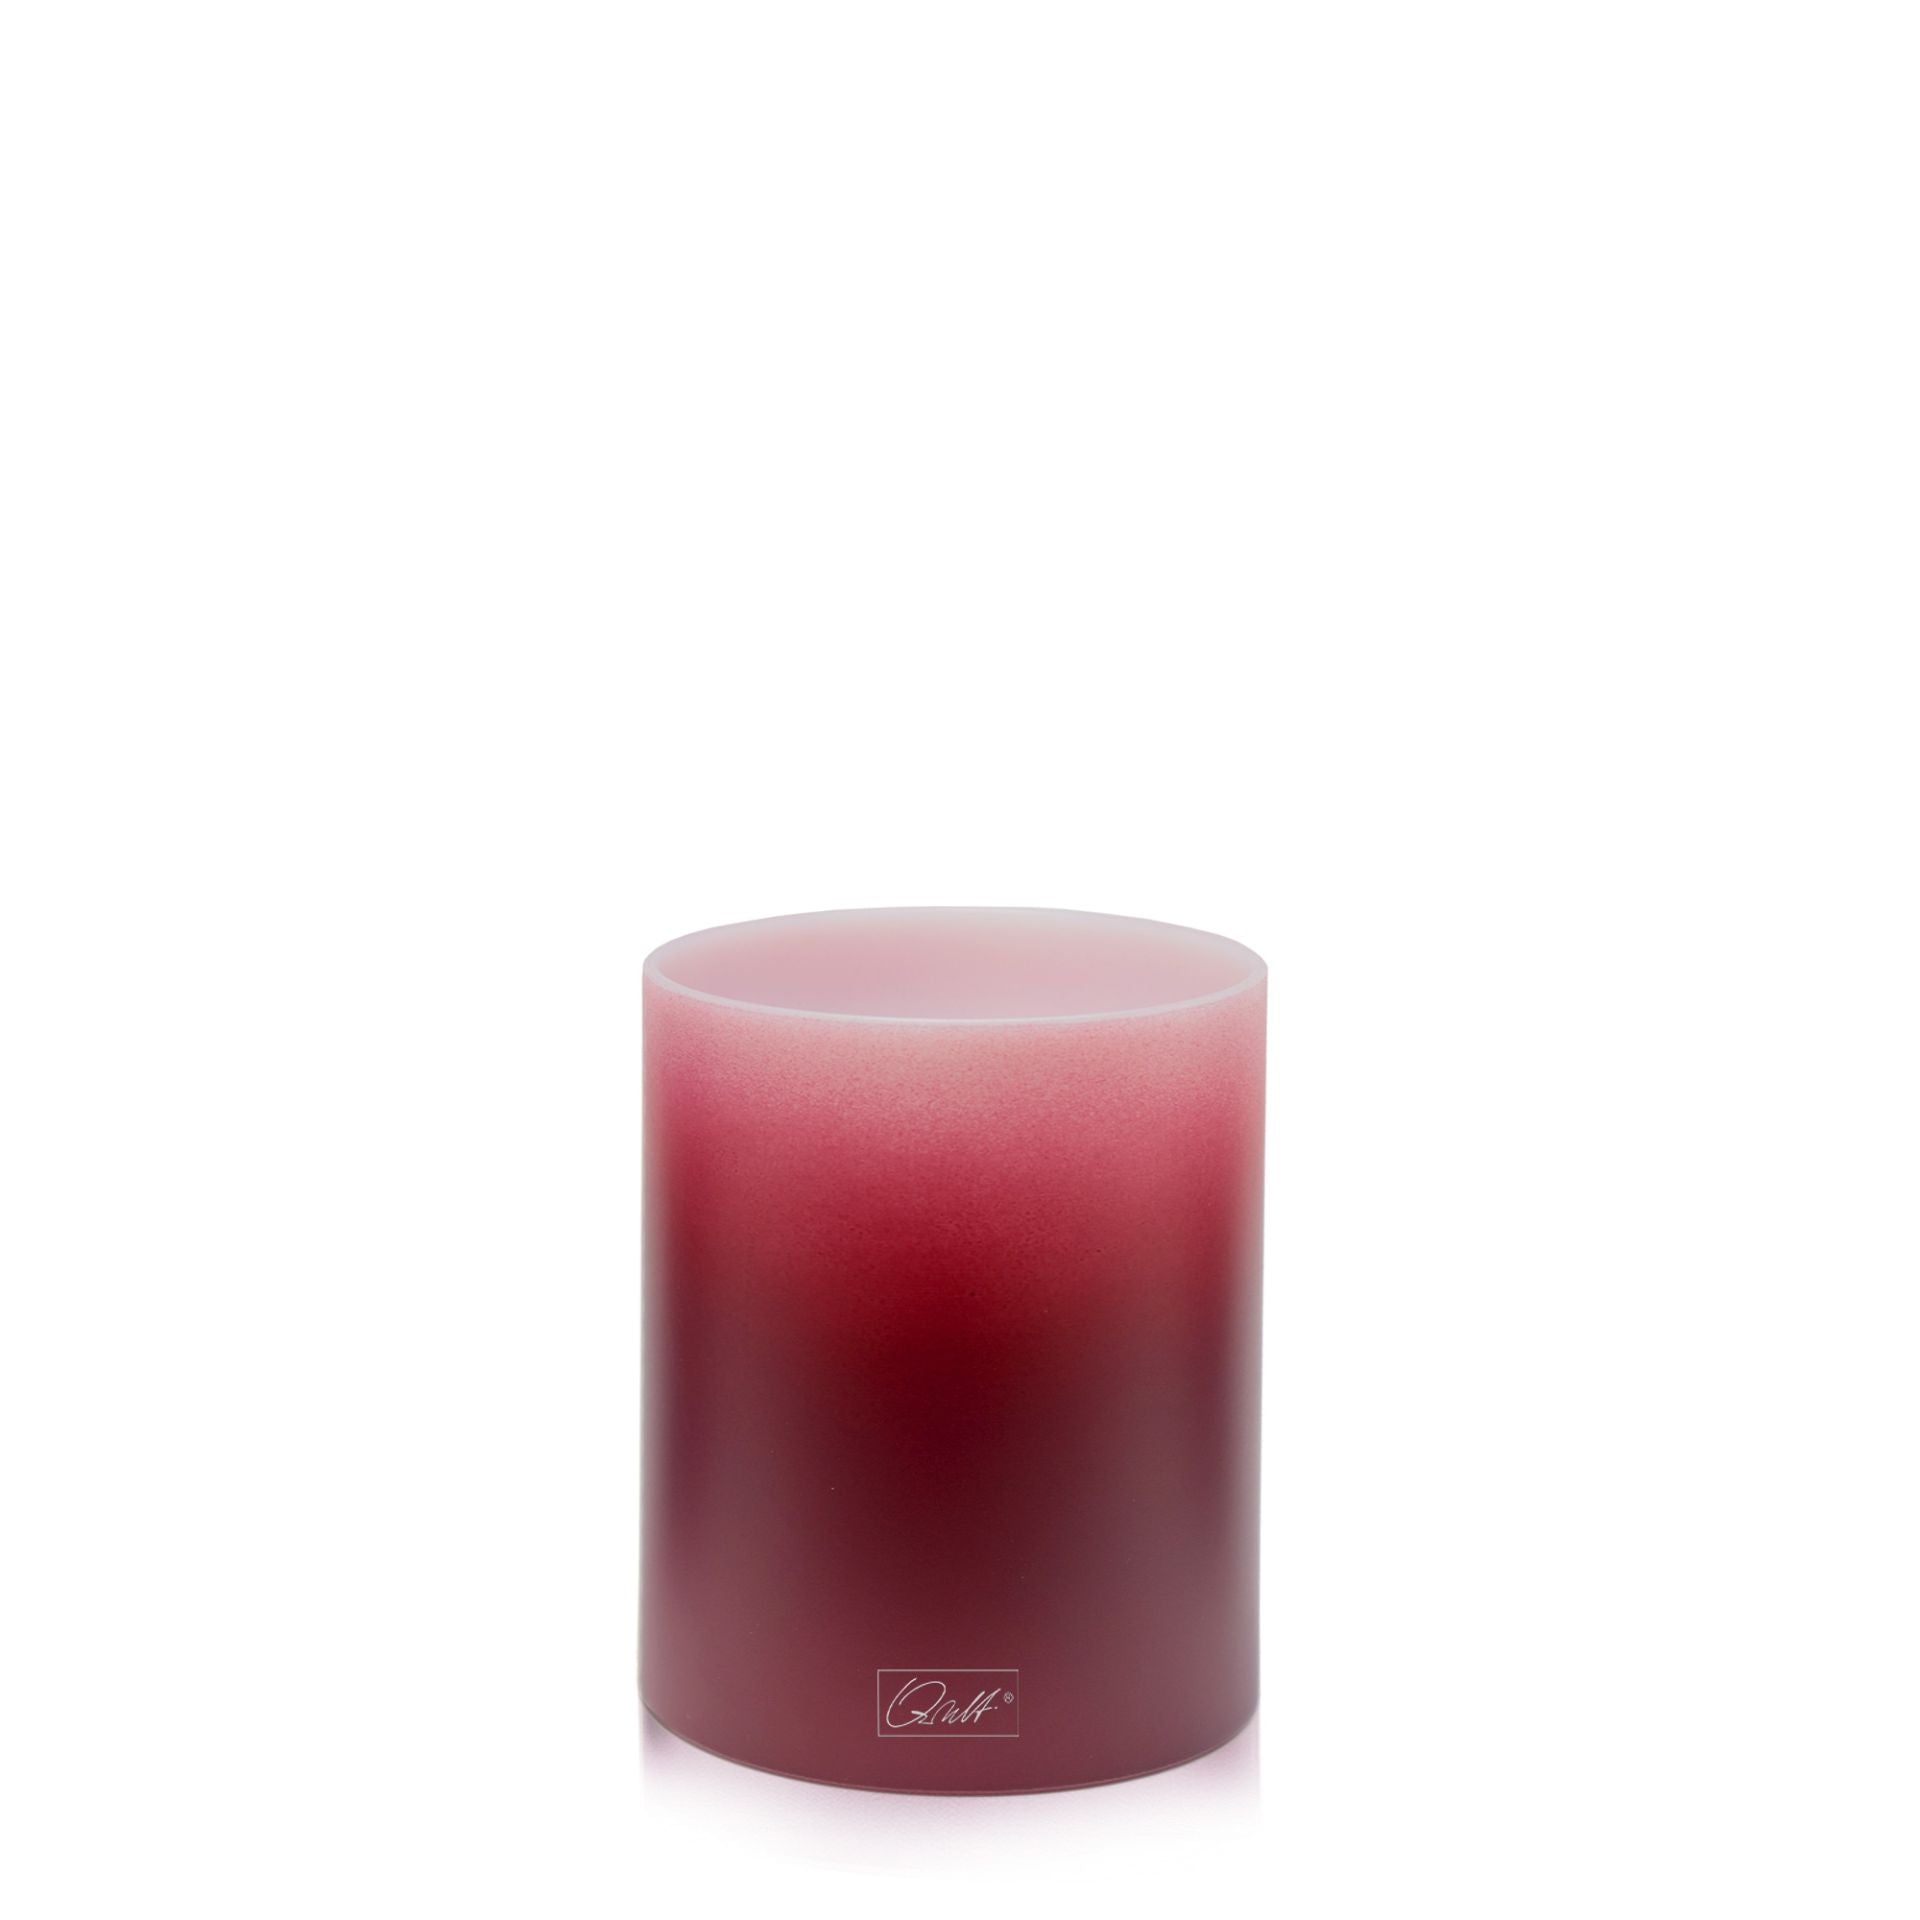 Kaufen merlot-red Qult Inside Teelichthalter in Kerzenform Color Ø 8 cm